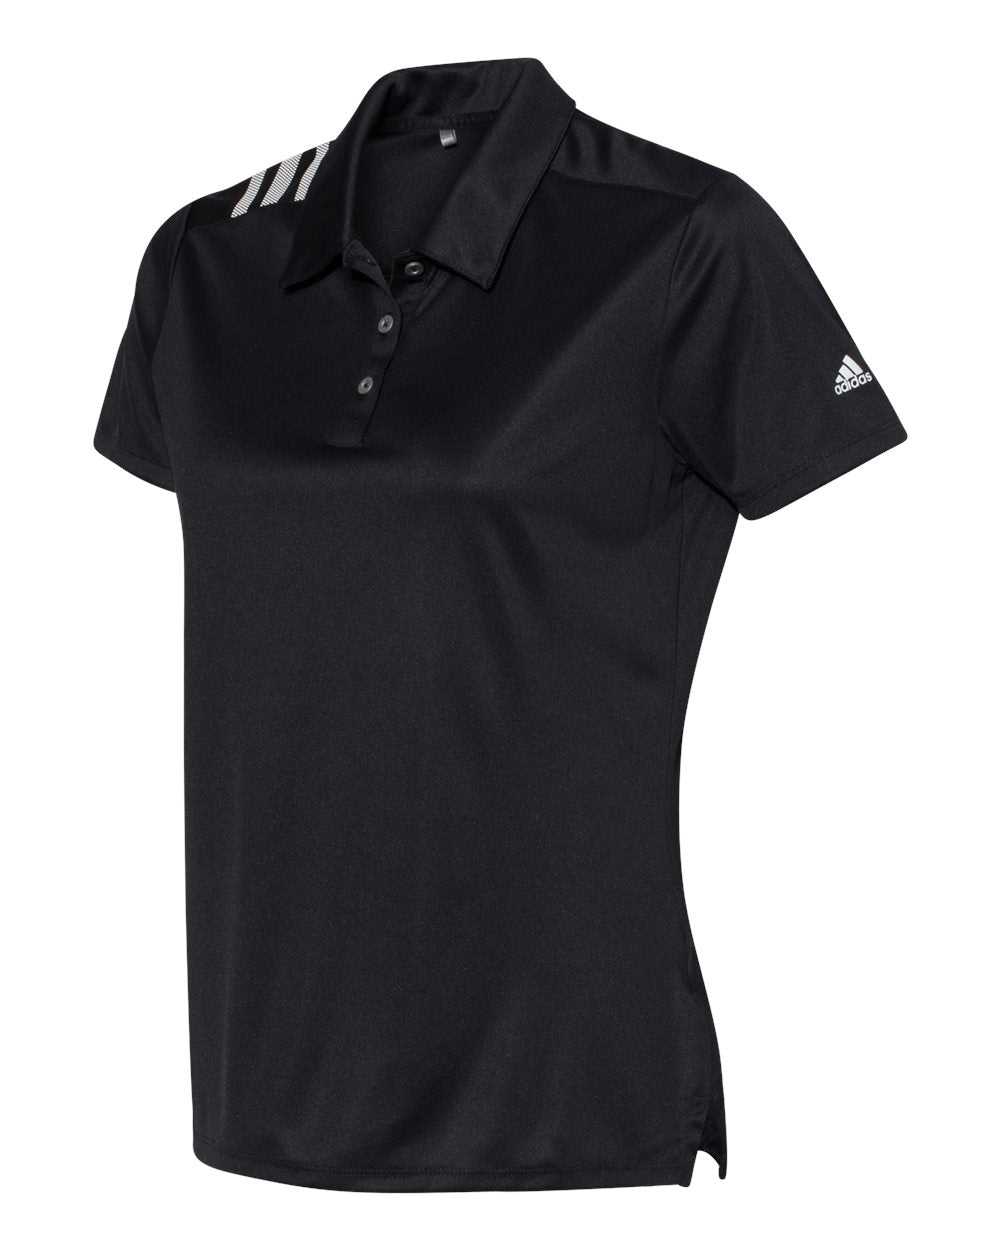 Adidas A325 Women's 3-Stripes Shoulder Sport Shirt - Black White - HIT a Double